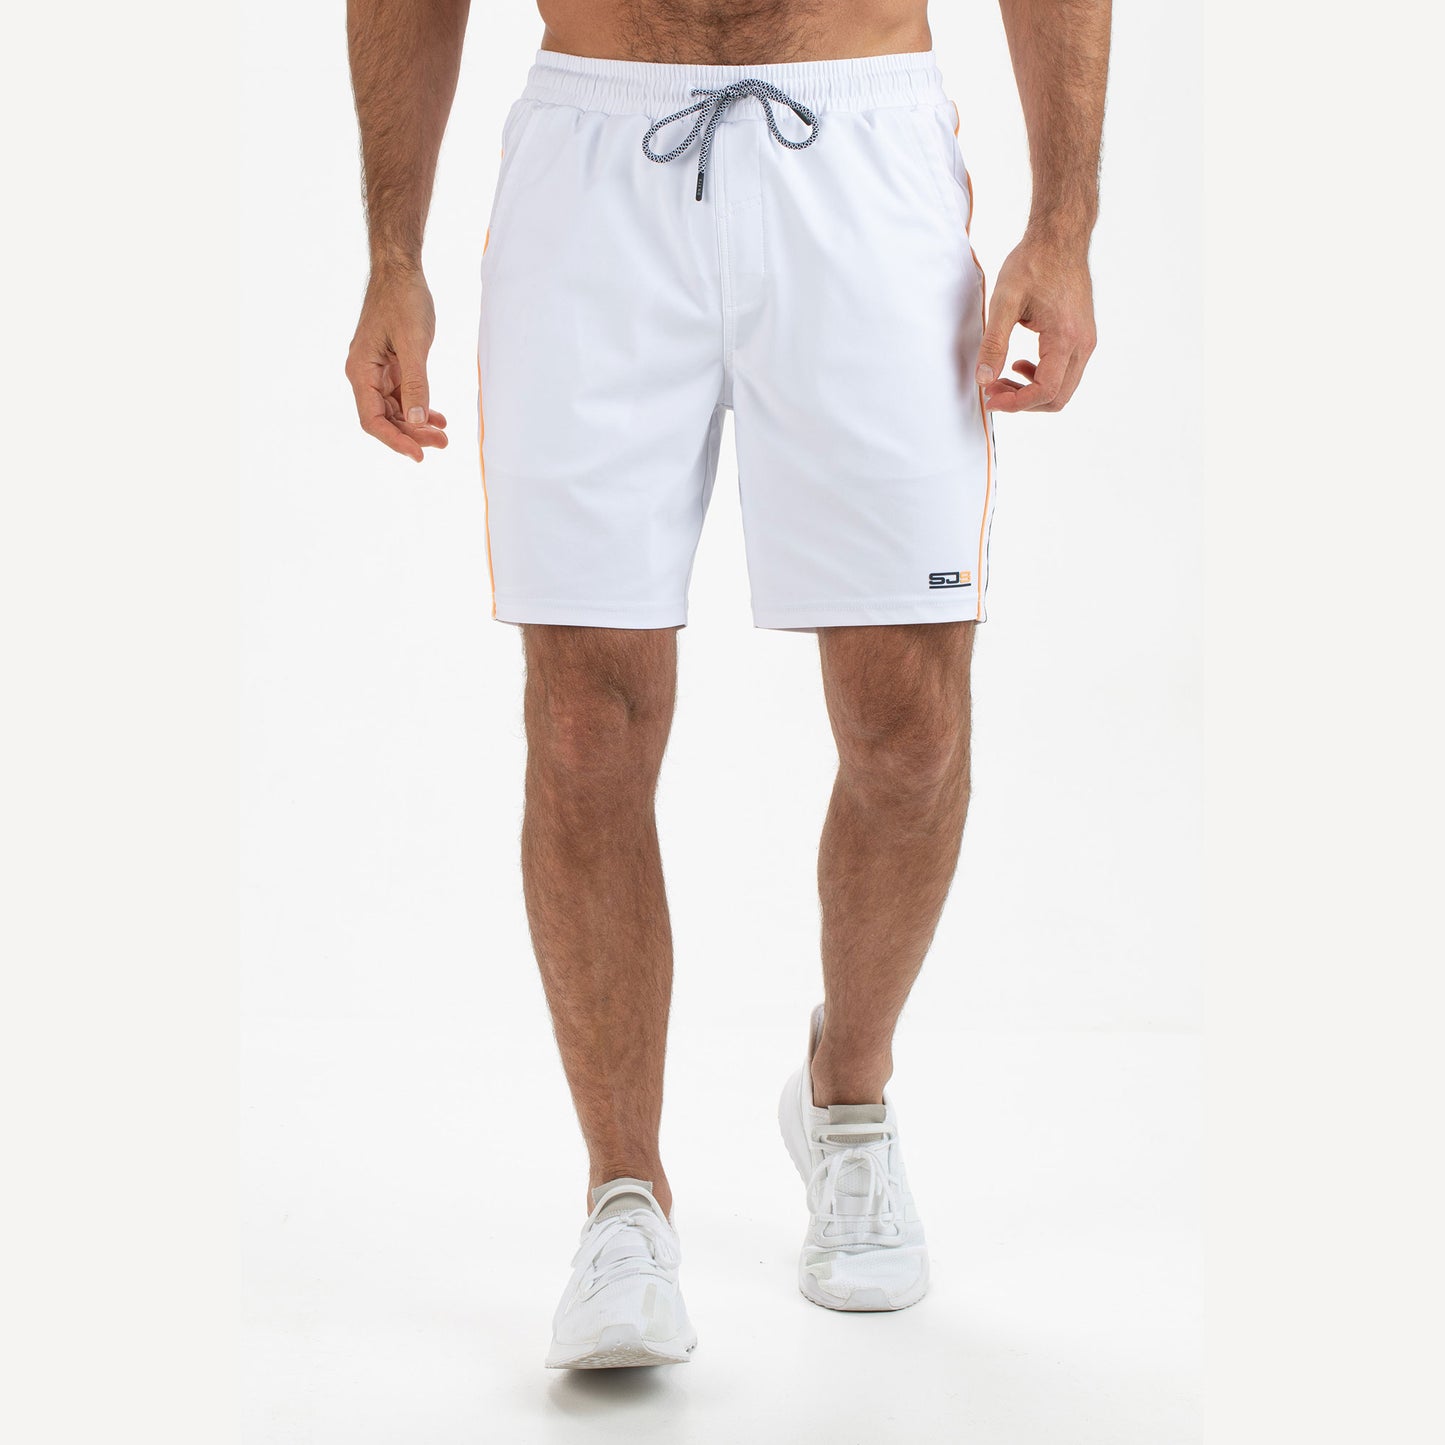 Sjeng Sports Marino Men's Tennis Shorts White (1)